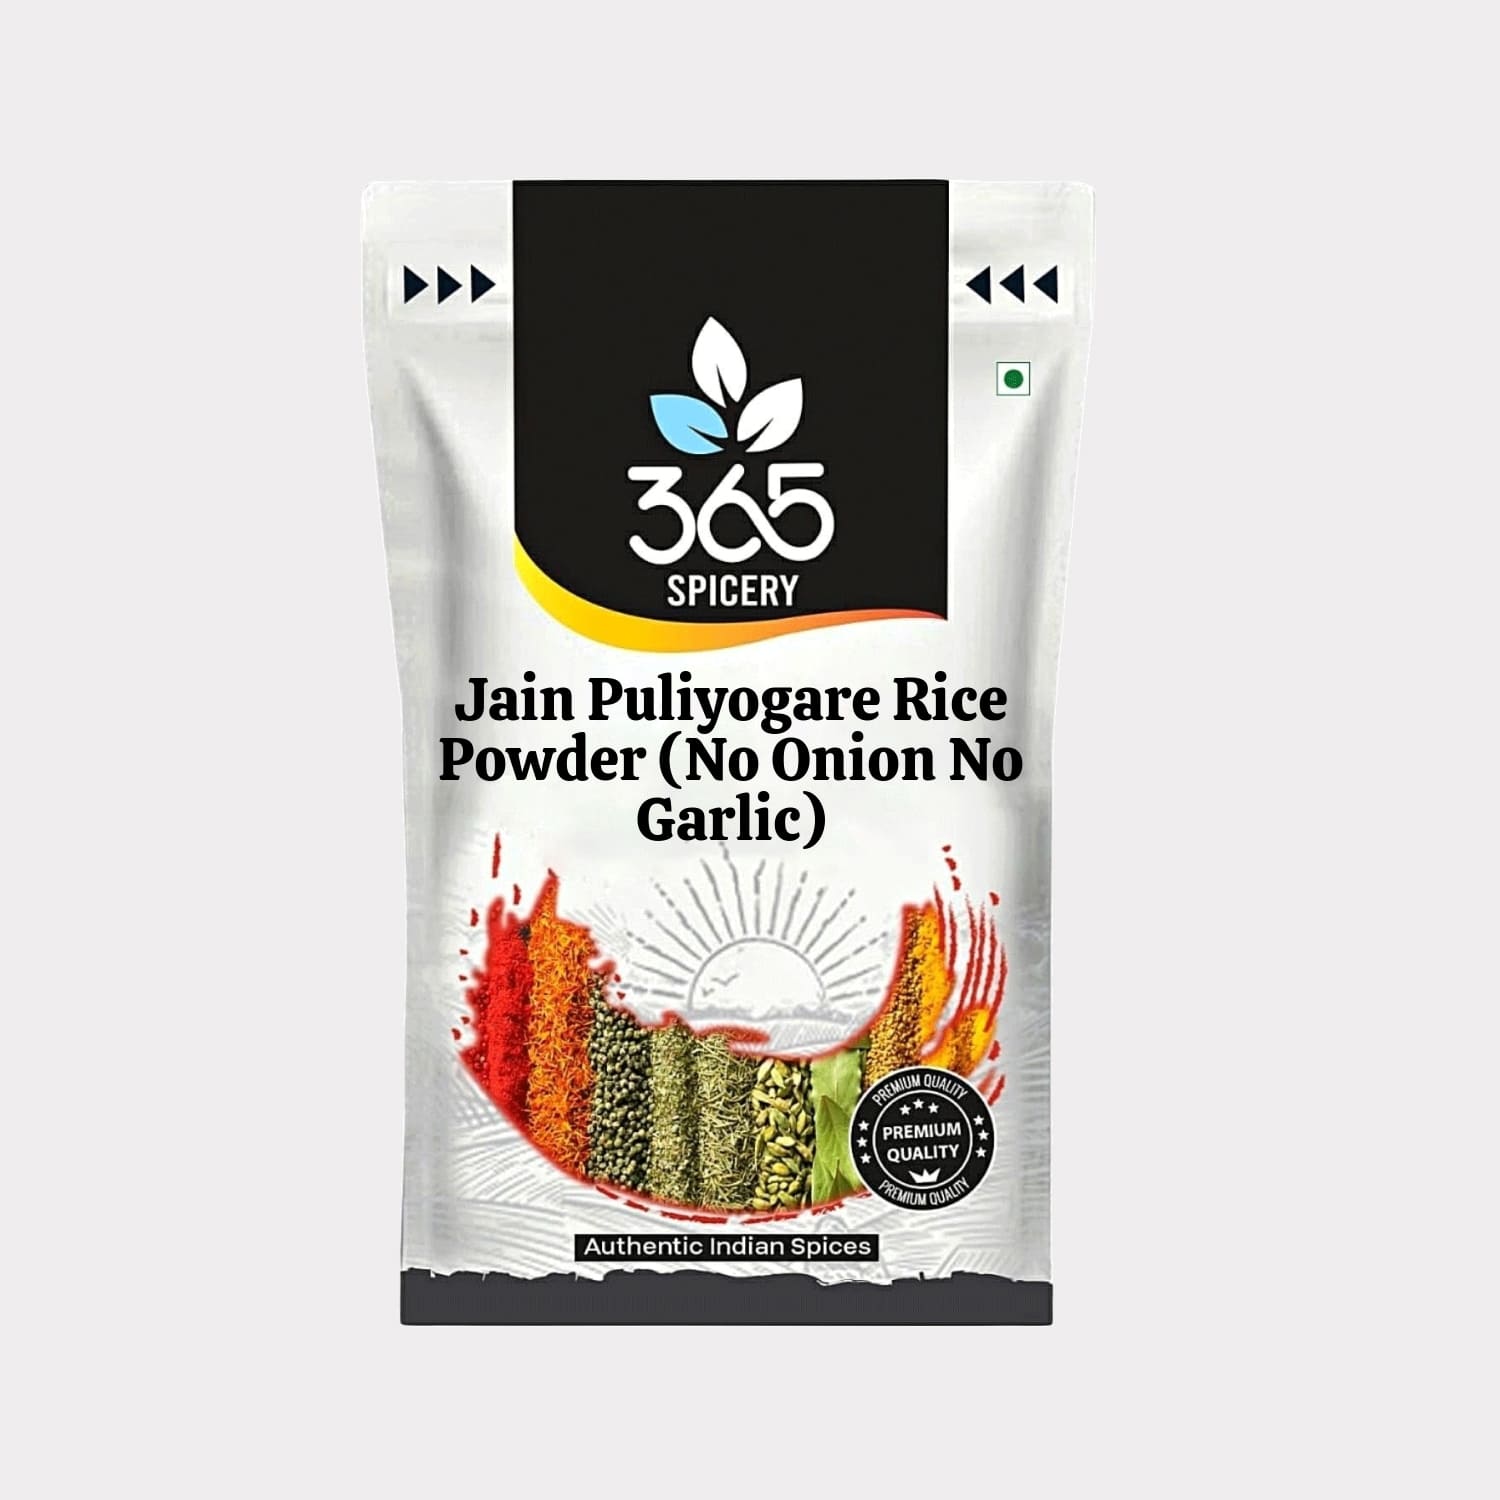 Jain Puliyogare Rice Powder (No Onion No Garlic)